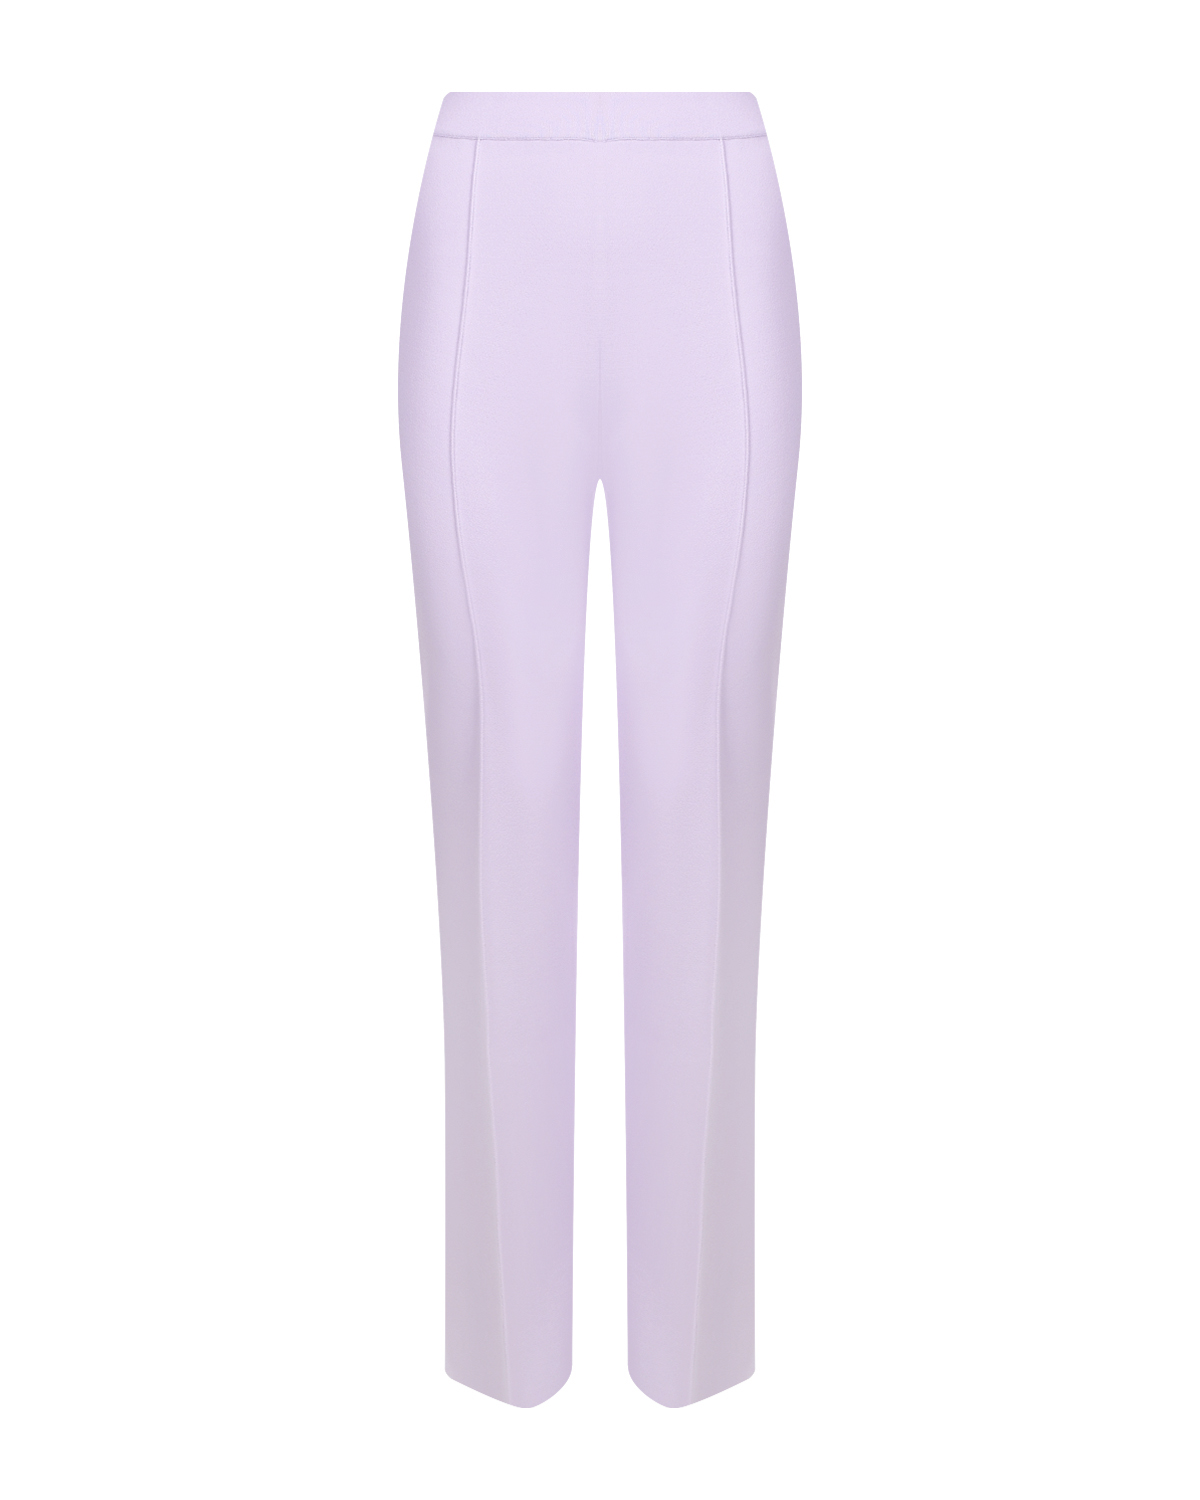 Сиреневые брюки клеш MRZ, размер 40, цвет сиреневый - фото 1